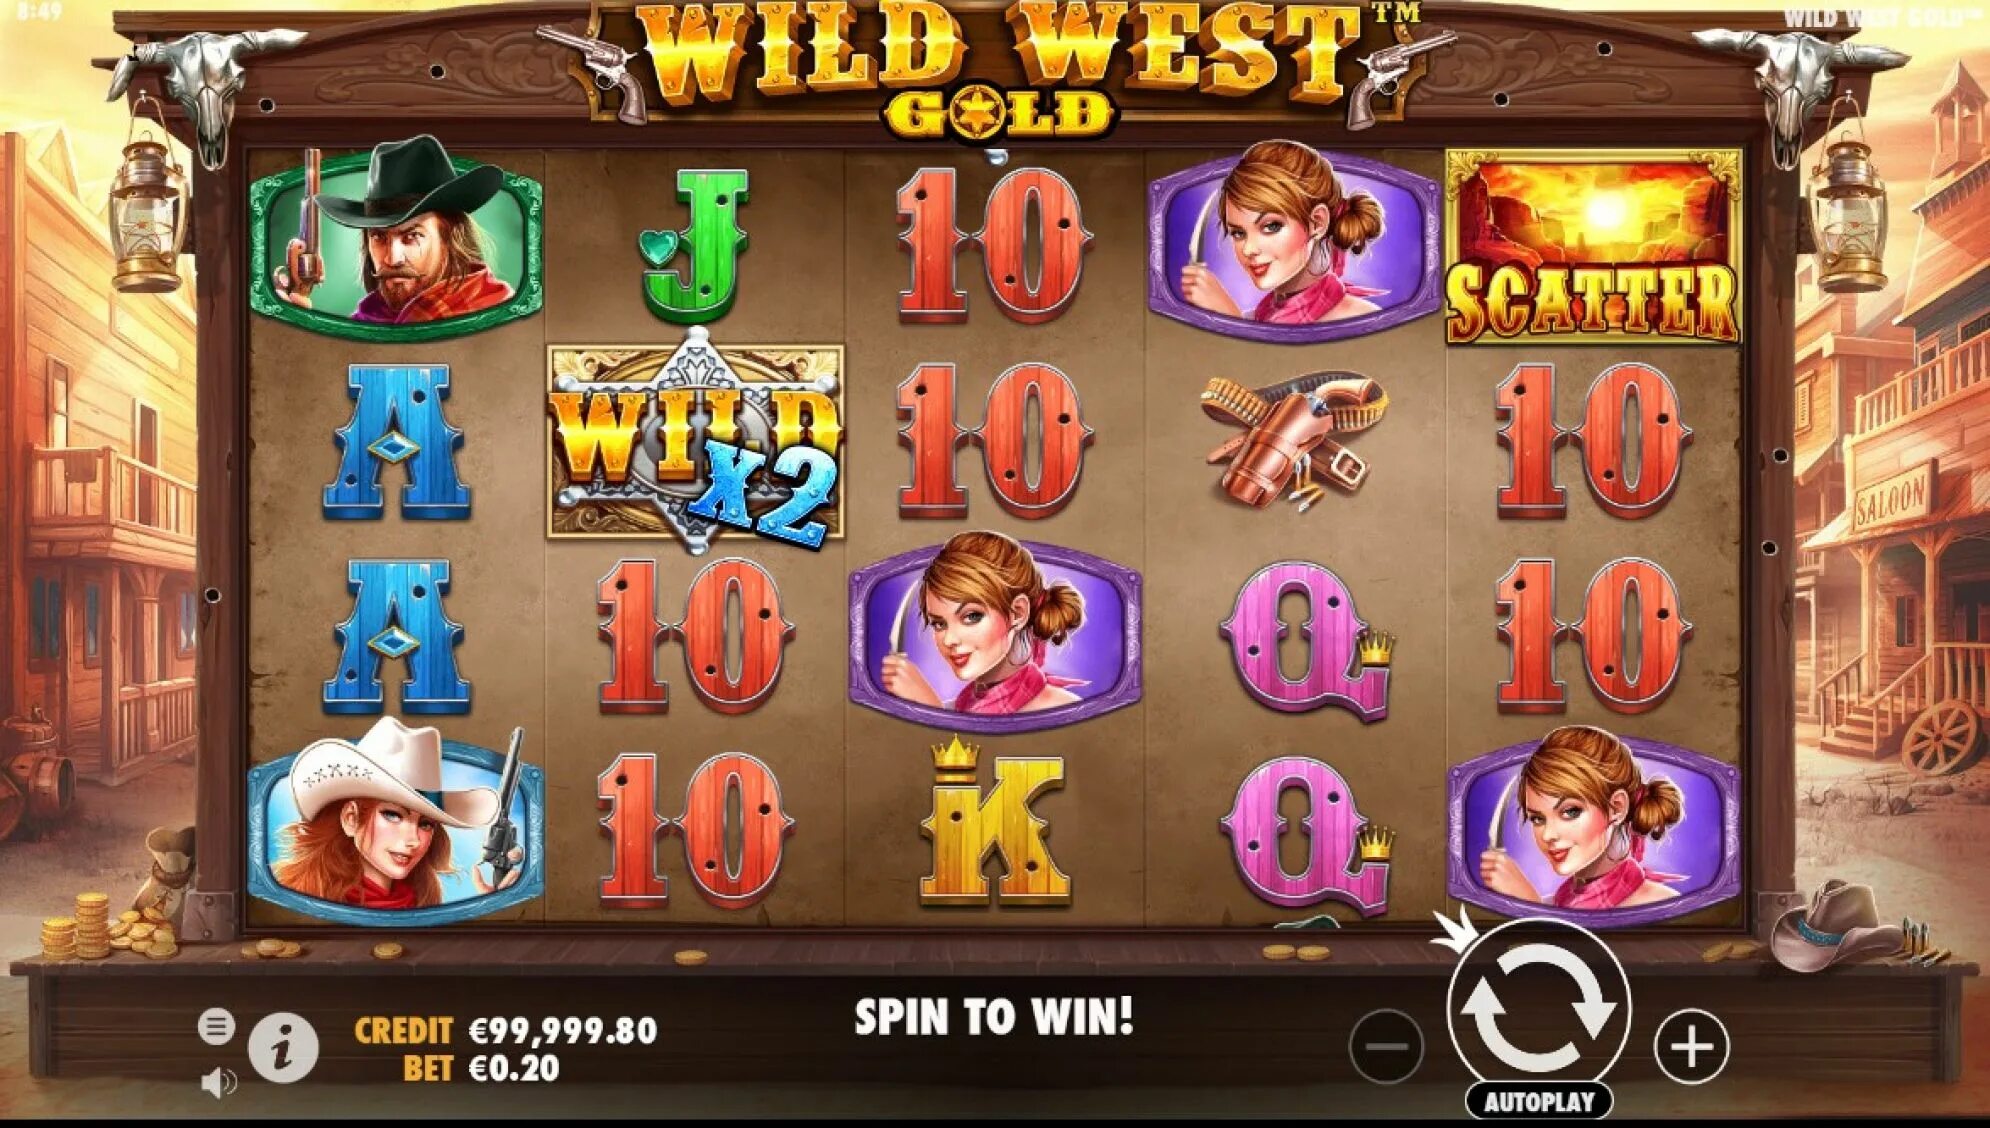 Голд вилд. Слот вилд Вест. Вилд Вест Голд слот. Wild West Duels слот. Wild West Slot game.